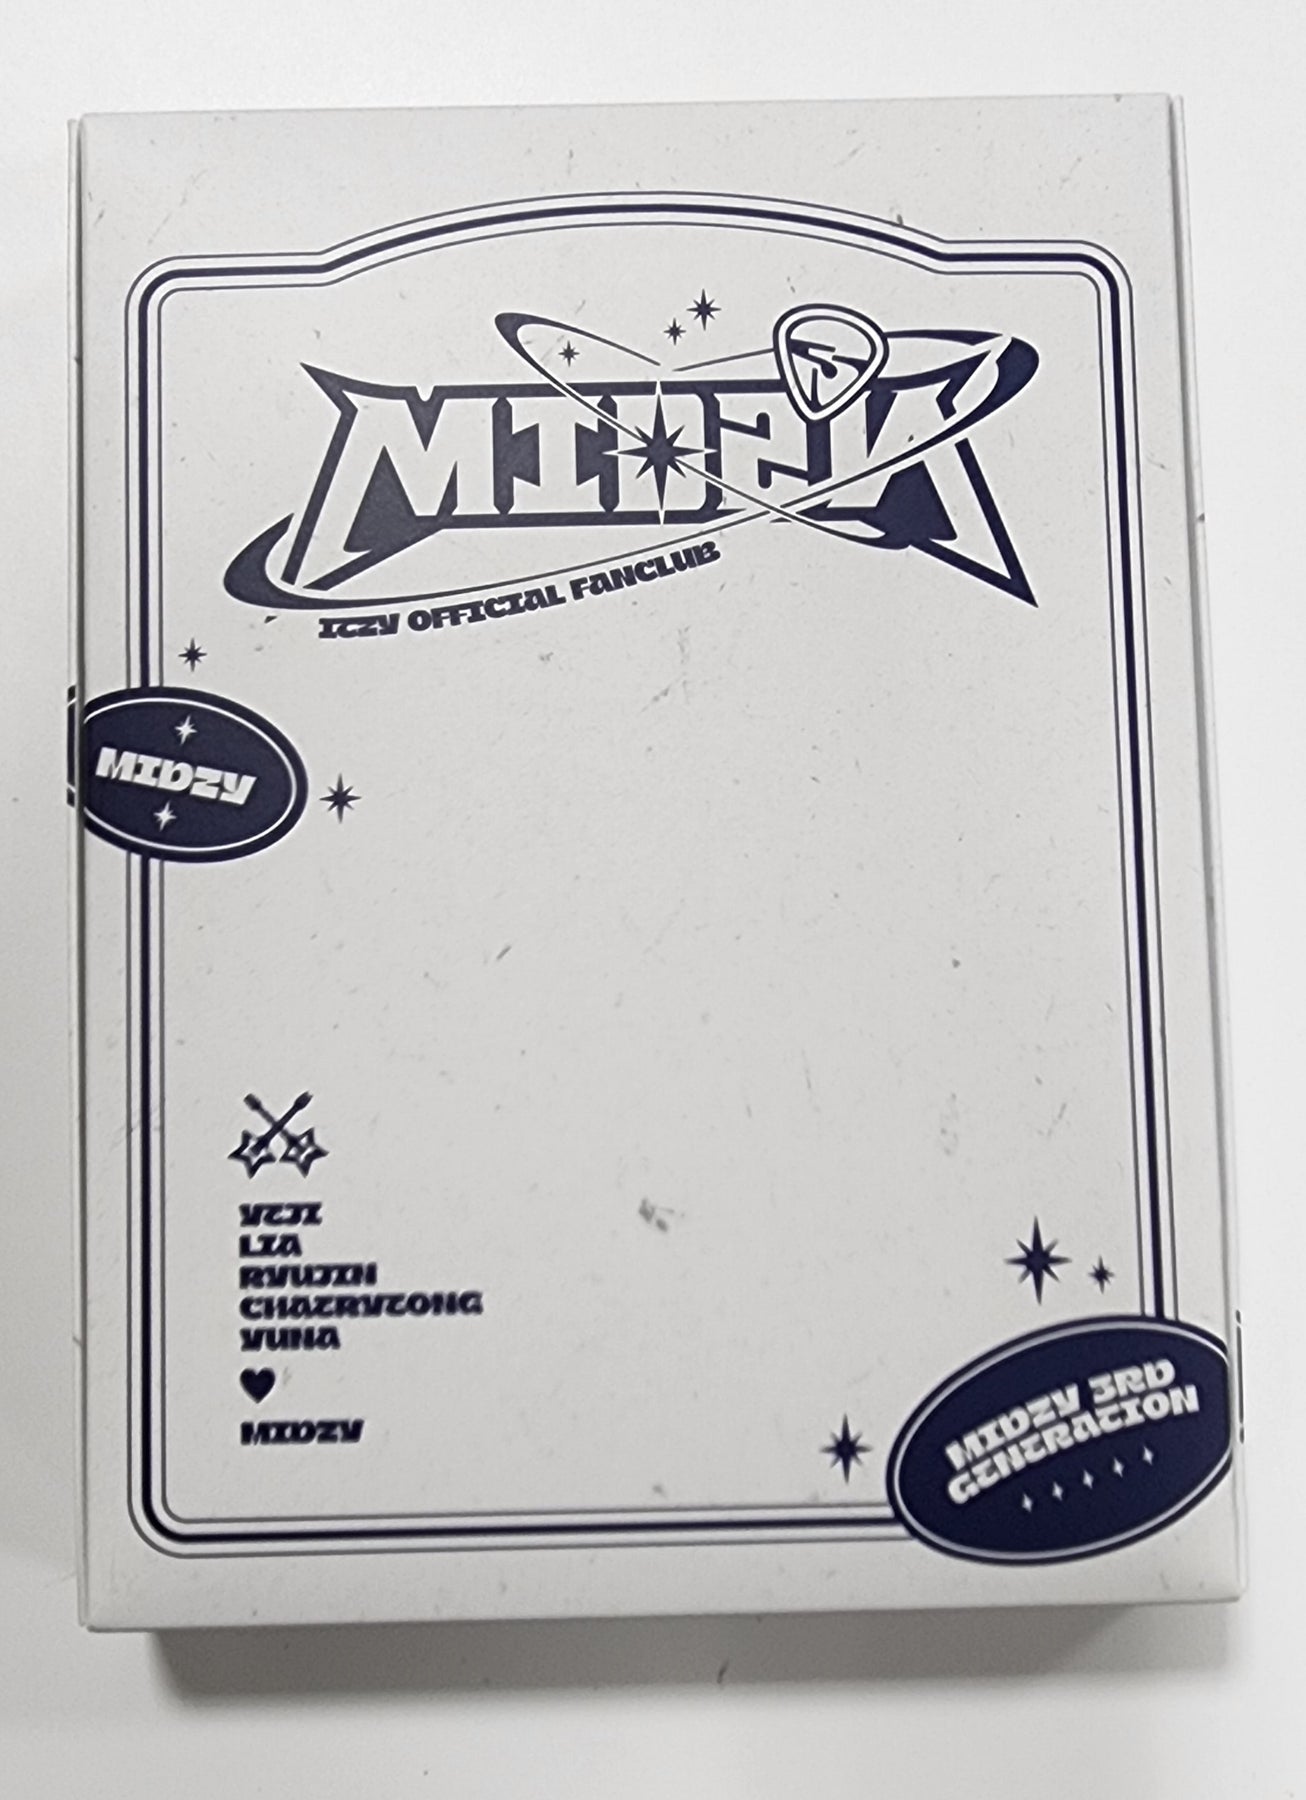 ITZY - Official Fanclub MIDZY 3RD GENERATION Membership Kit 